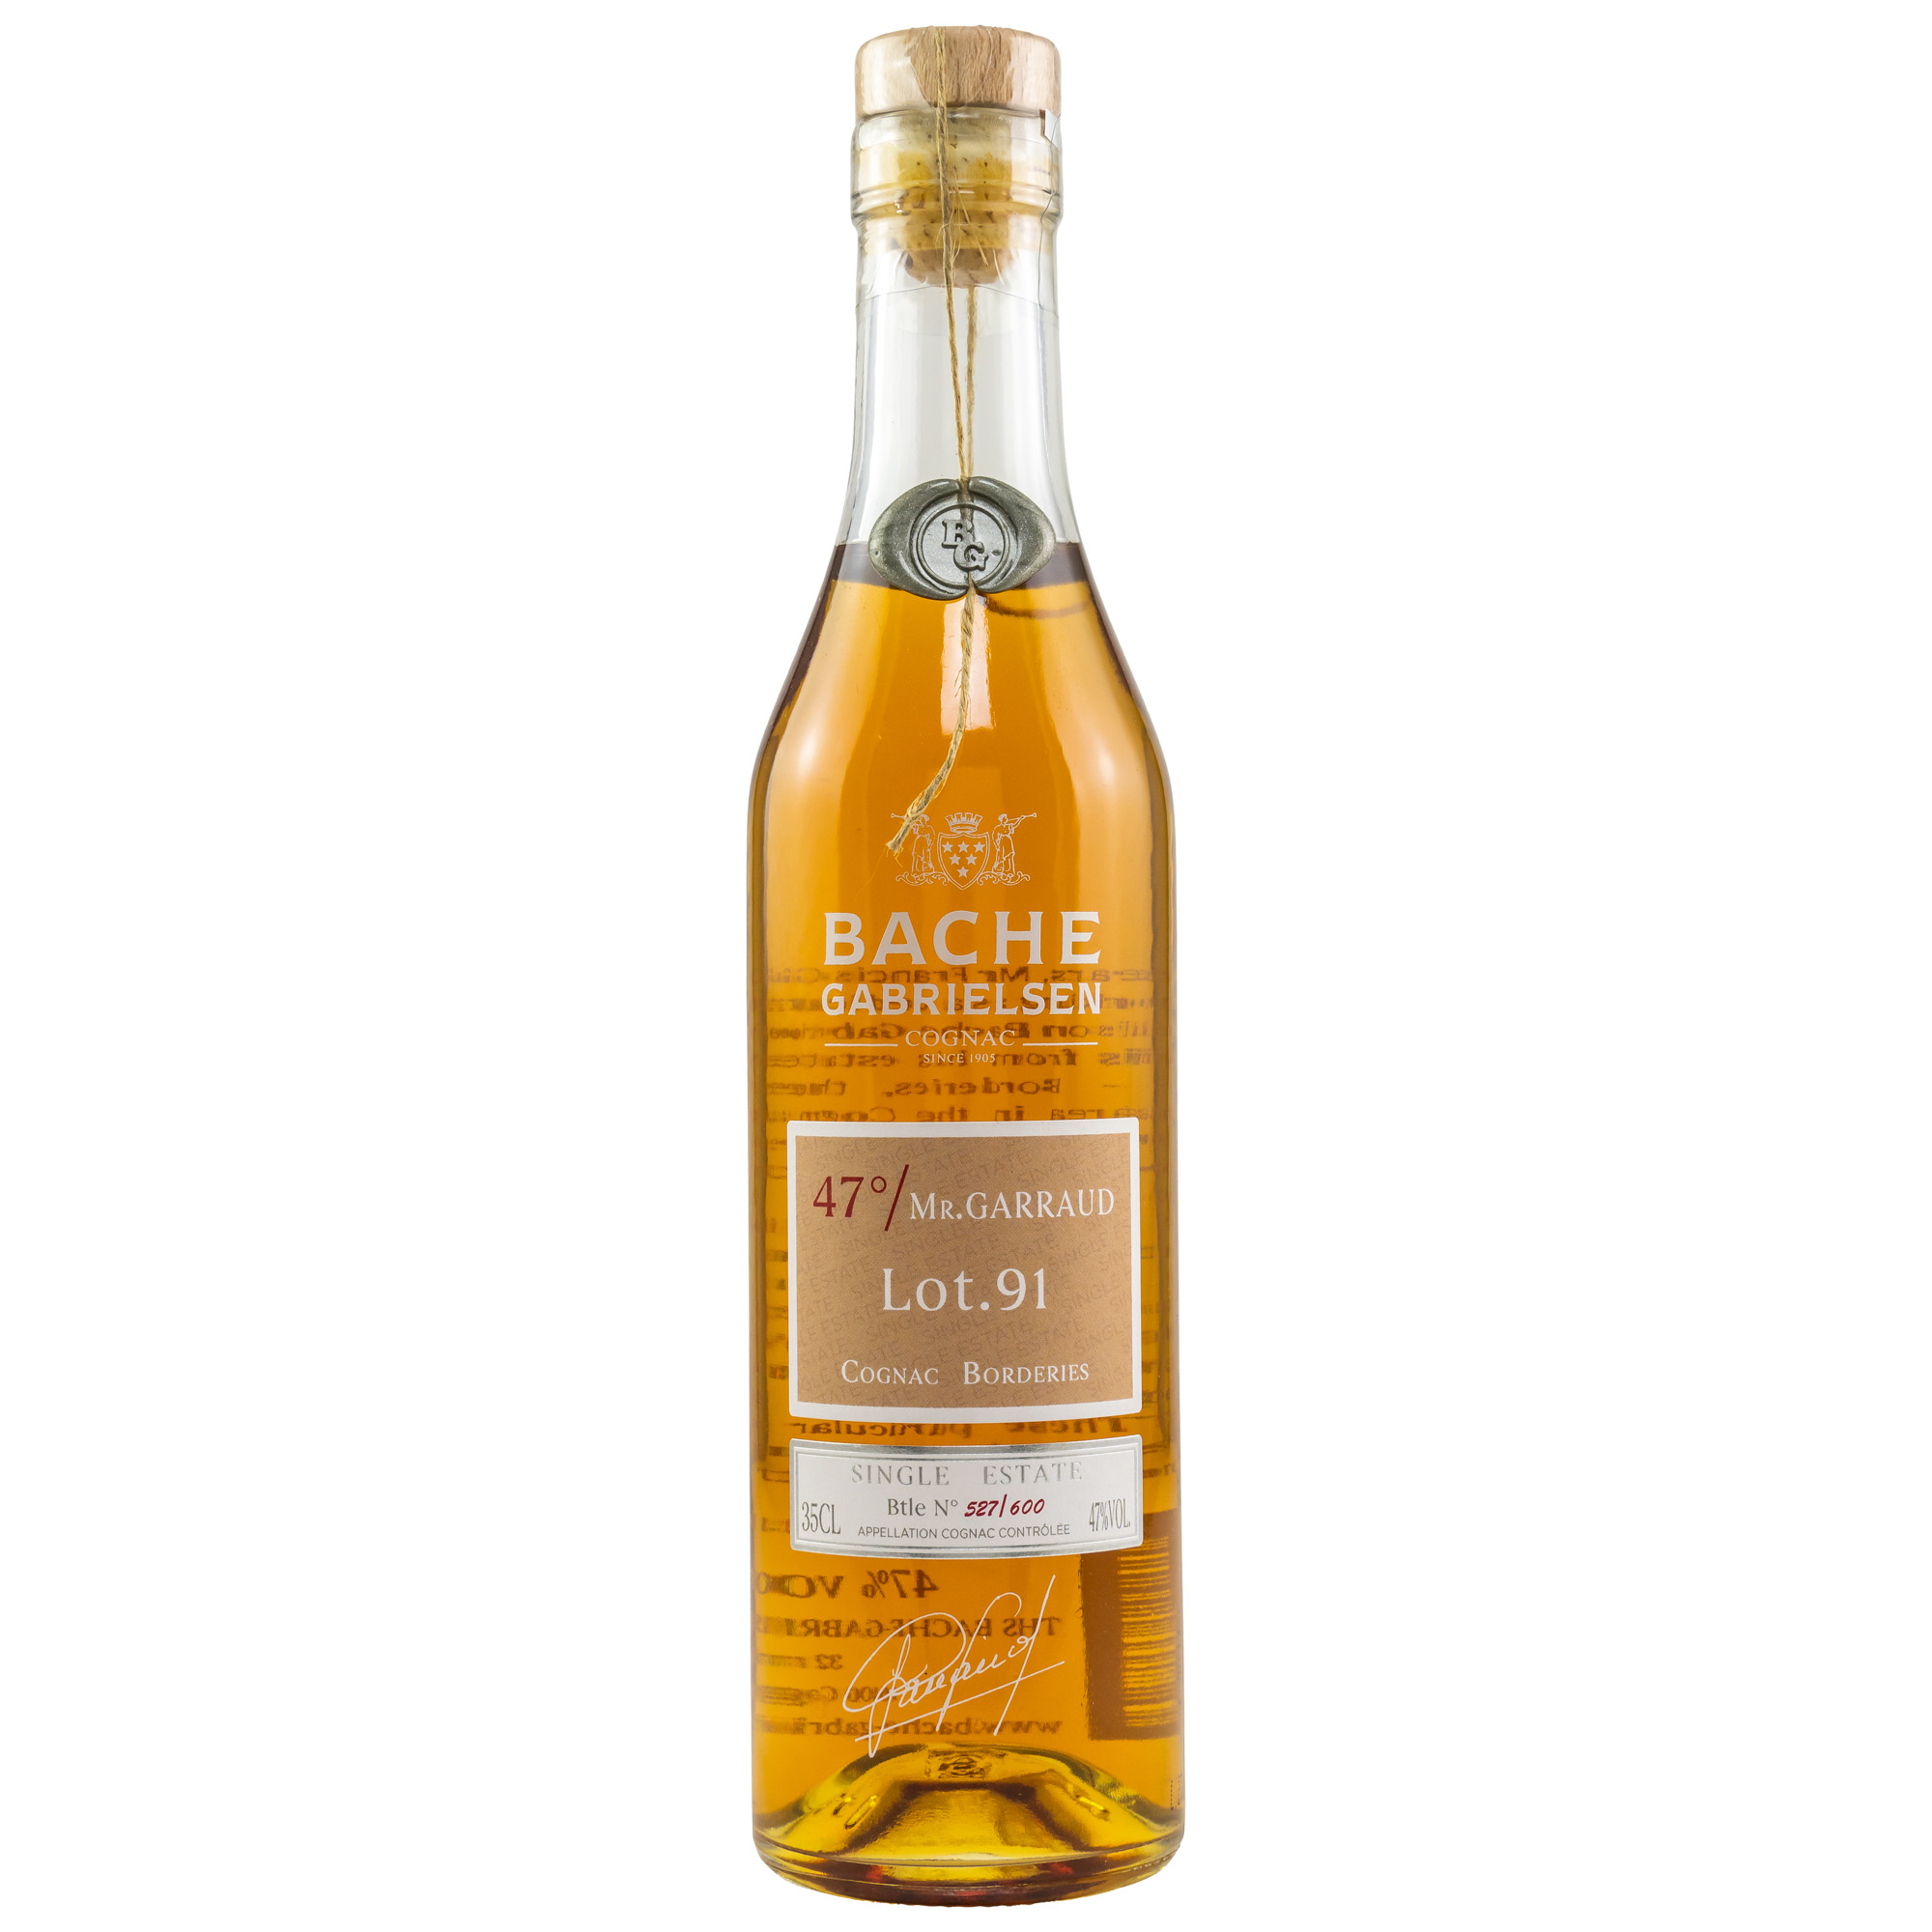 Bache-Gabrielsen Garraud Lot 91 Single Estate Cognac Borderies 0,35 ltr. 47% Vol.